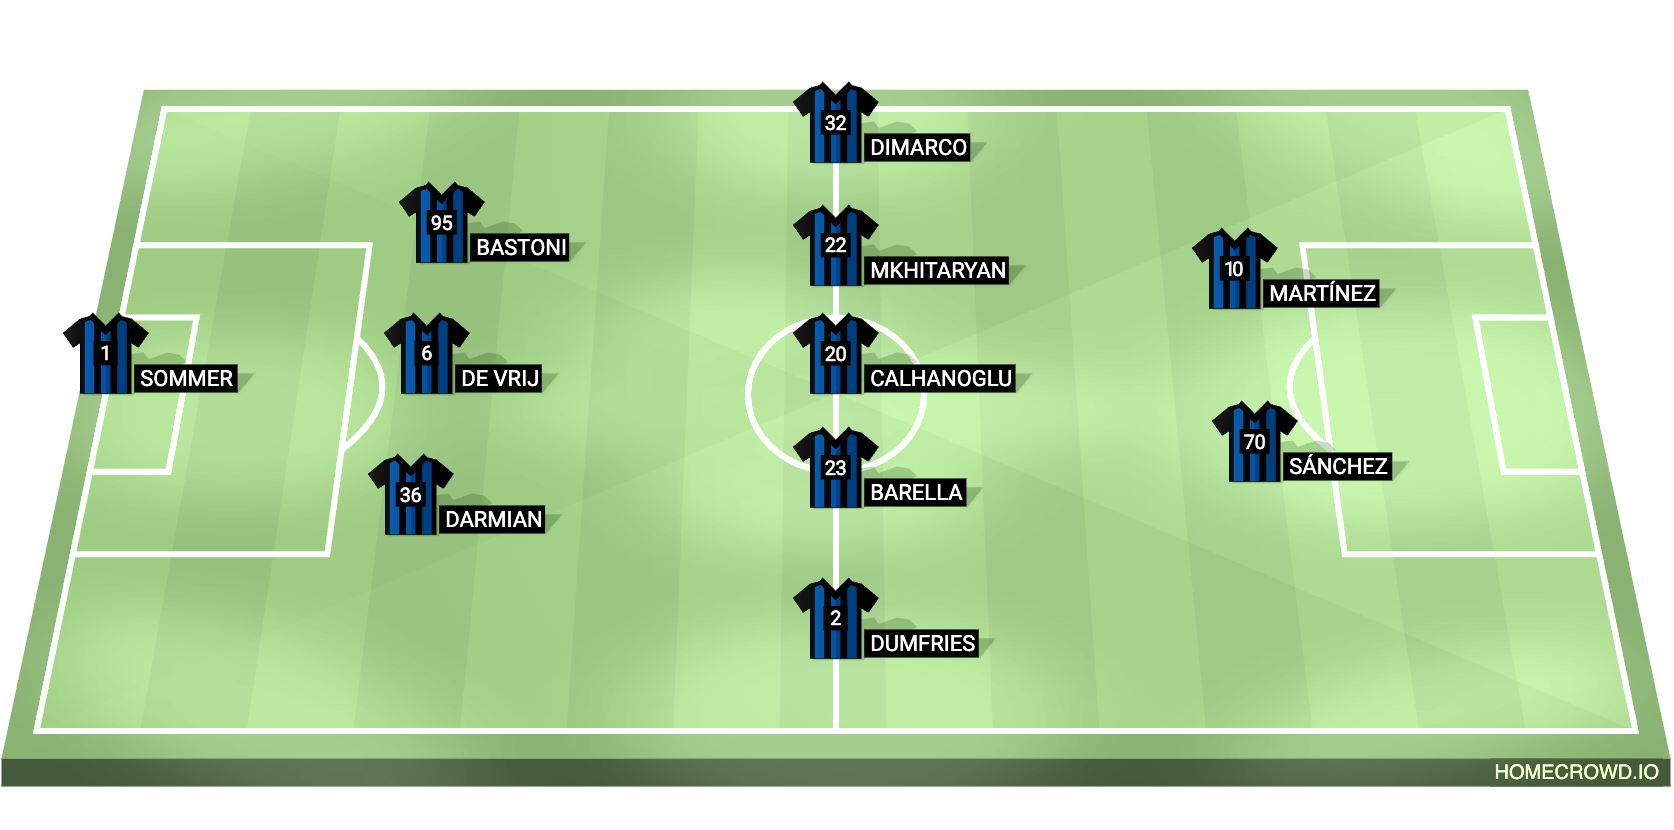 Serie A: Inter vs. Frosinone probable line ups Football Italia - italia  serie b [1N7Z1U]